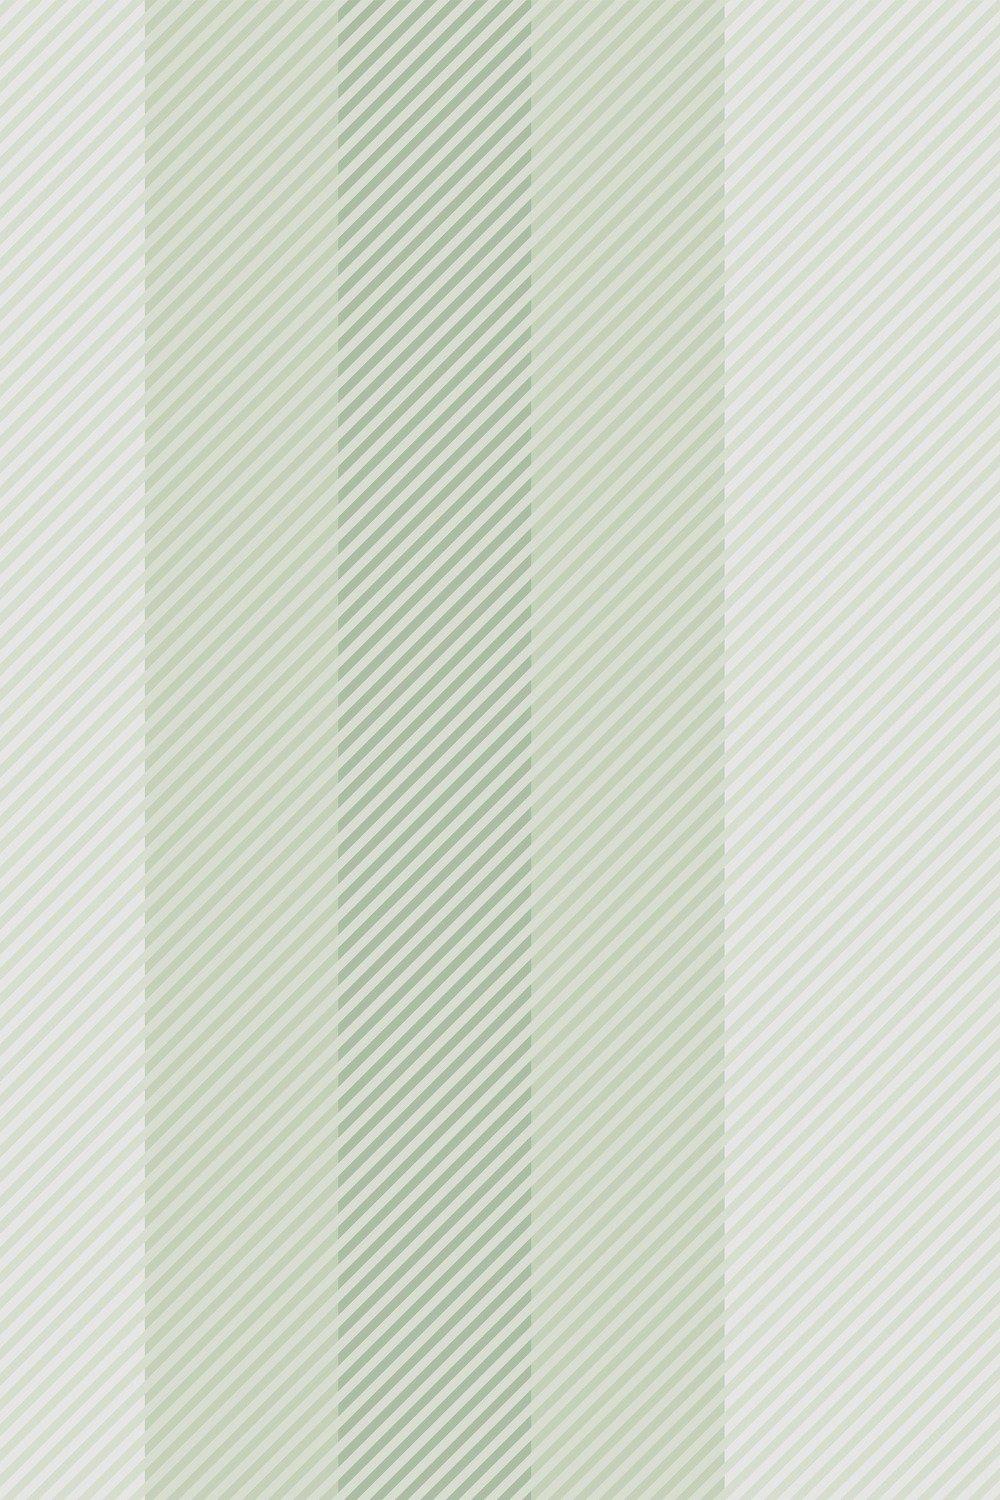 Eco-Friendly Multi Way Stripe Wallpaper